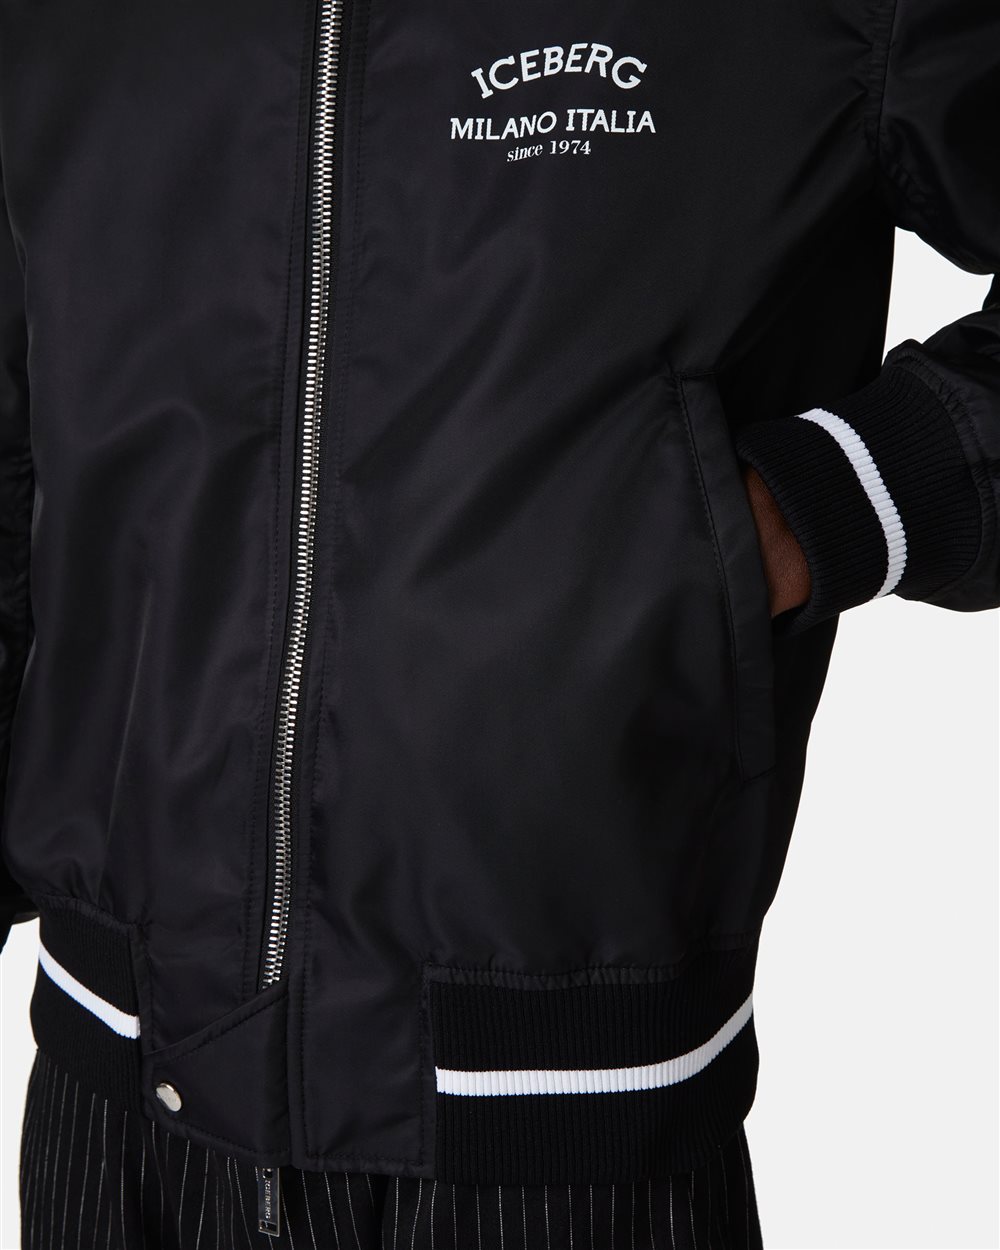 Bomber jacket with logo - Iceberg - Official Website